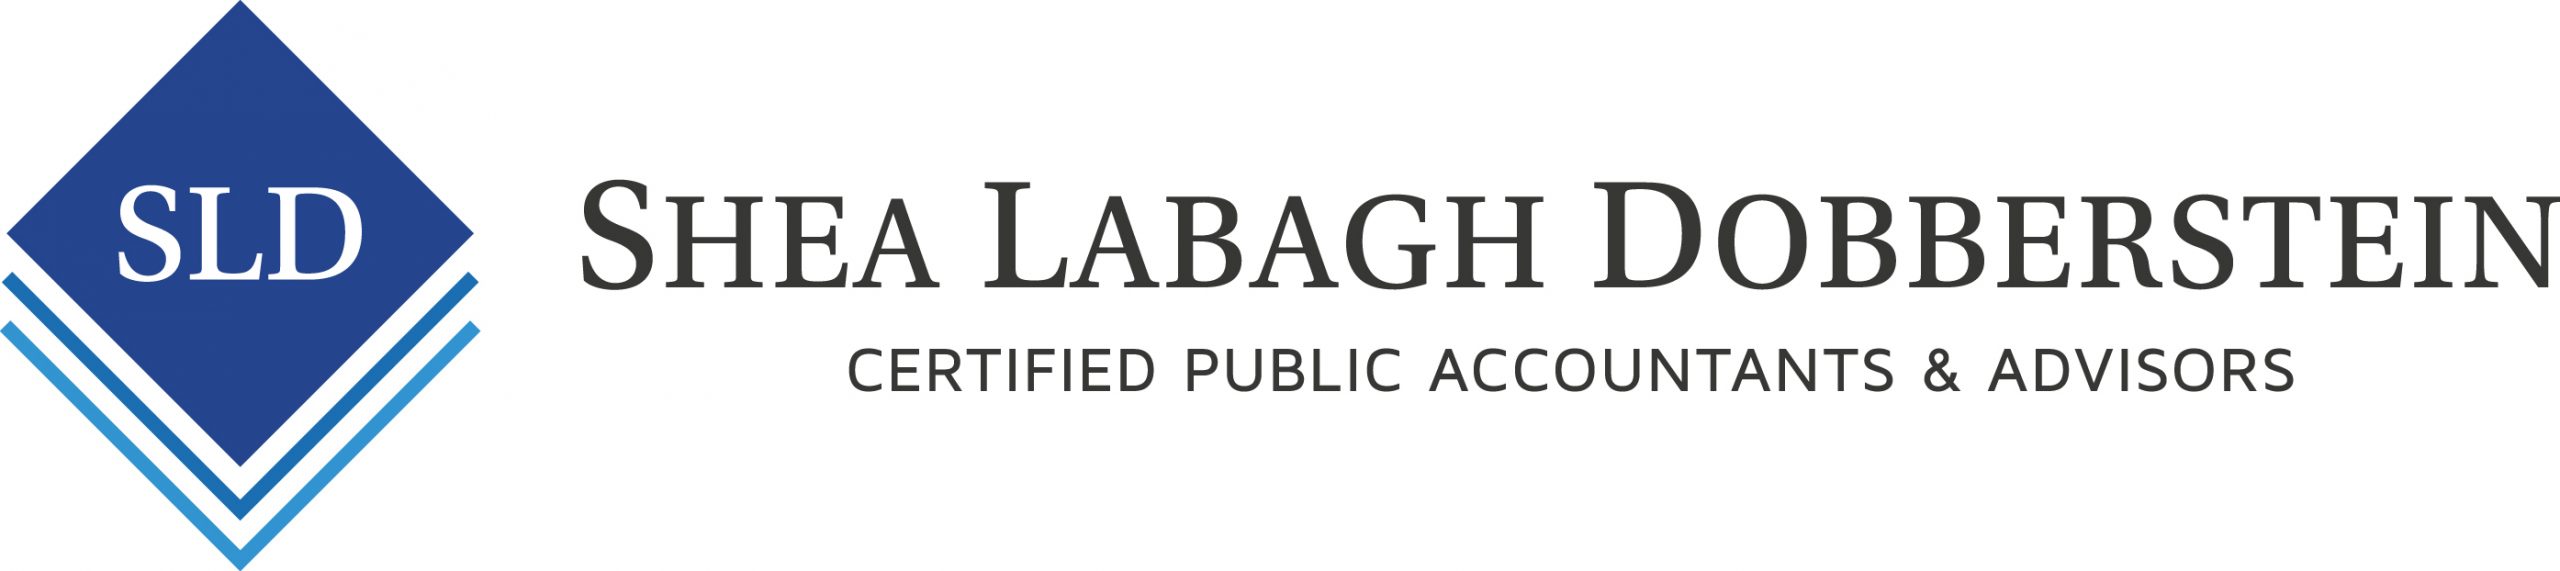 Shea Labagh Dobberstein logo